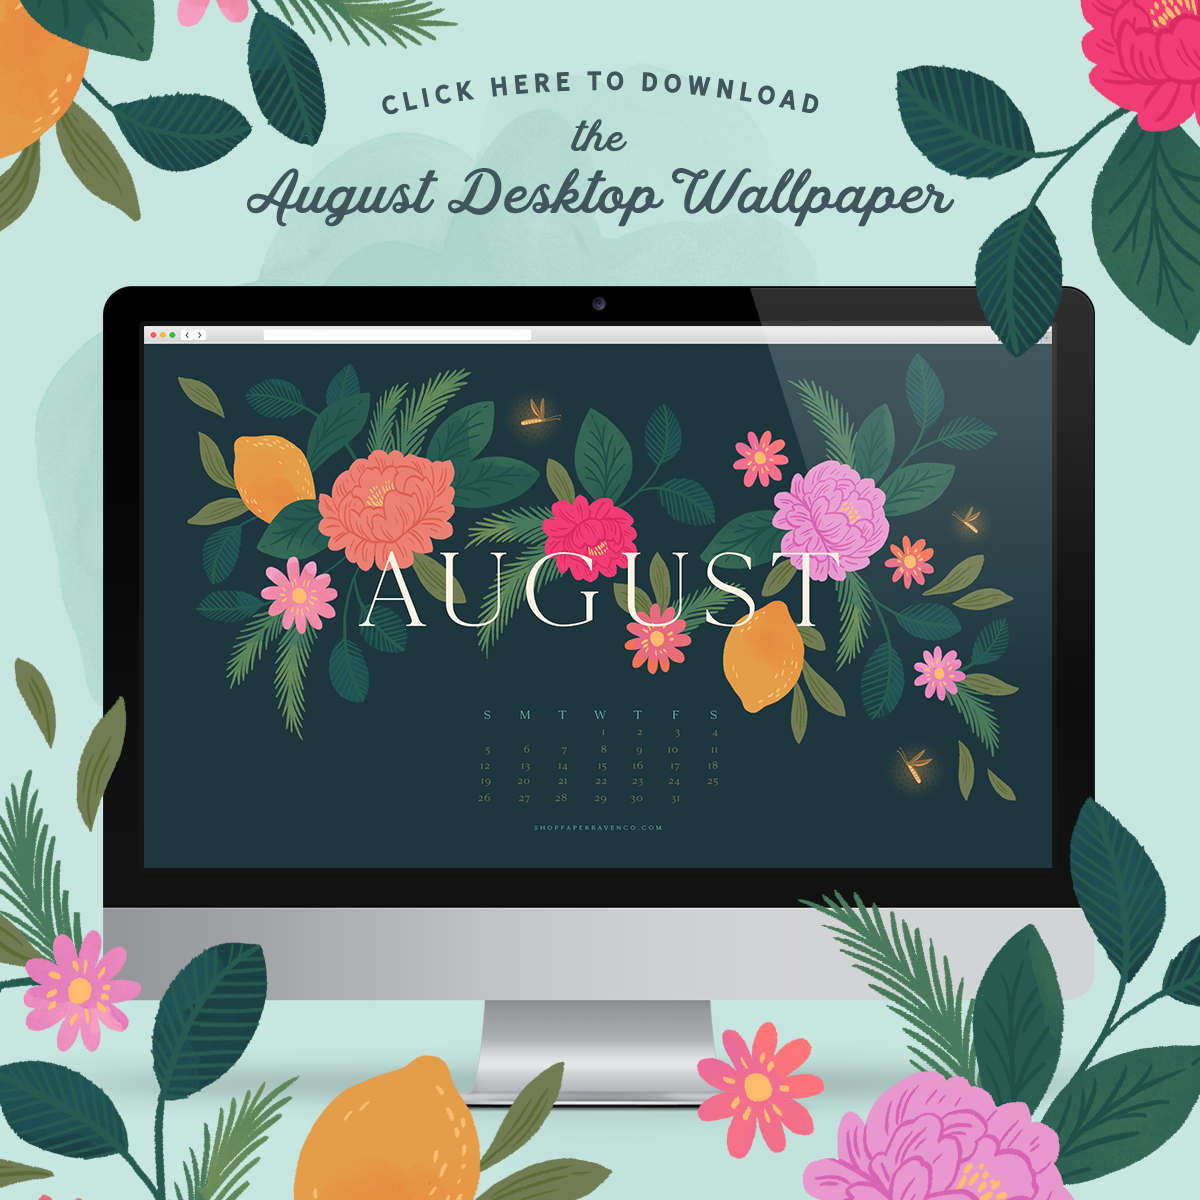 birthday month wallpaper,green,leaf,illustration,pattern,floral design